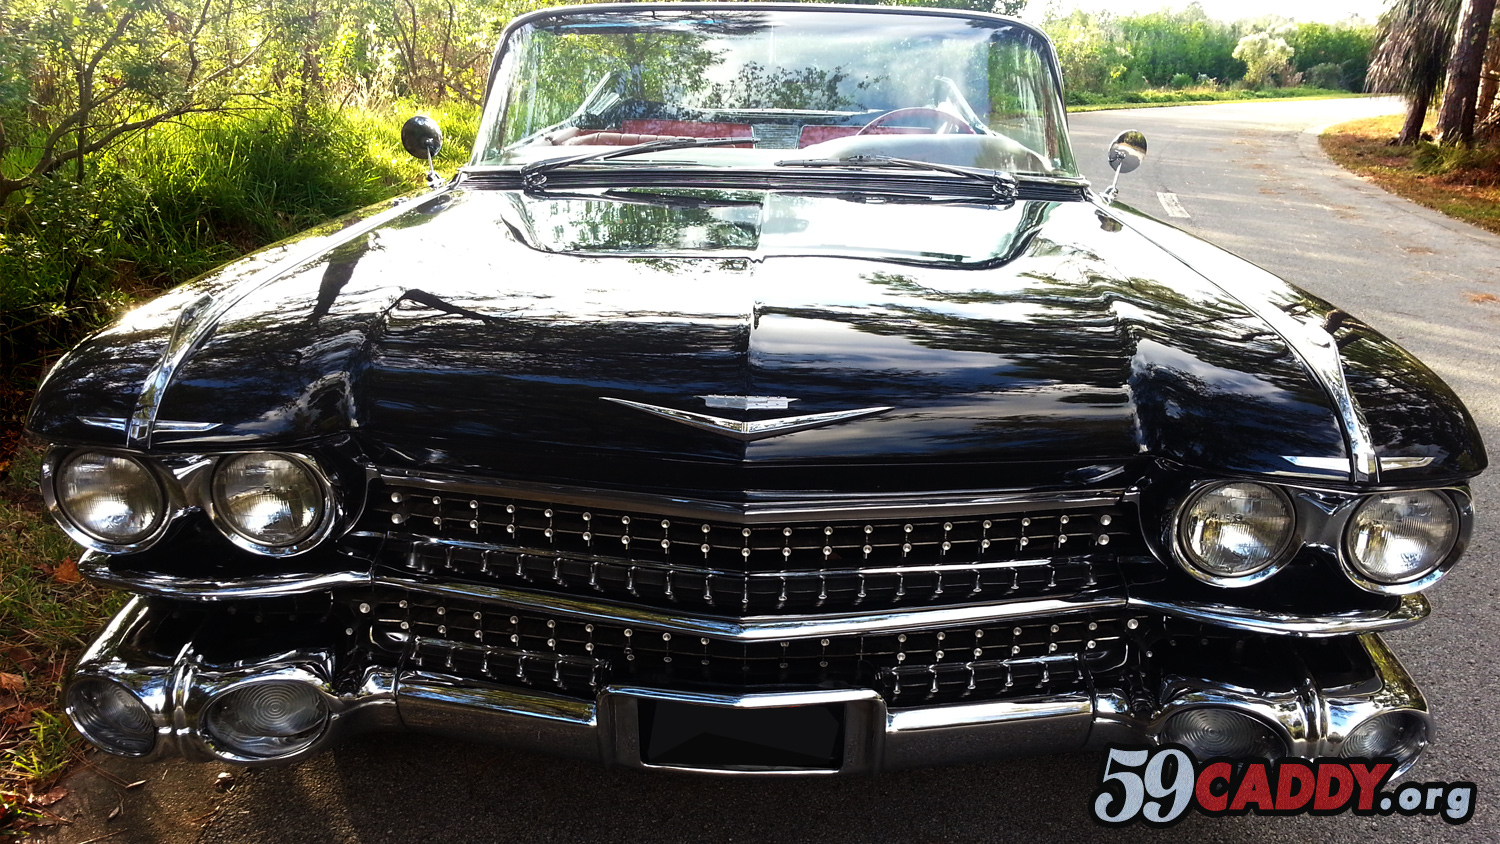 Black 1959 Cadillac Convertible For Sale Black 59 Caddy 1959 Black Cadillac Series 62 Convertible For Sale